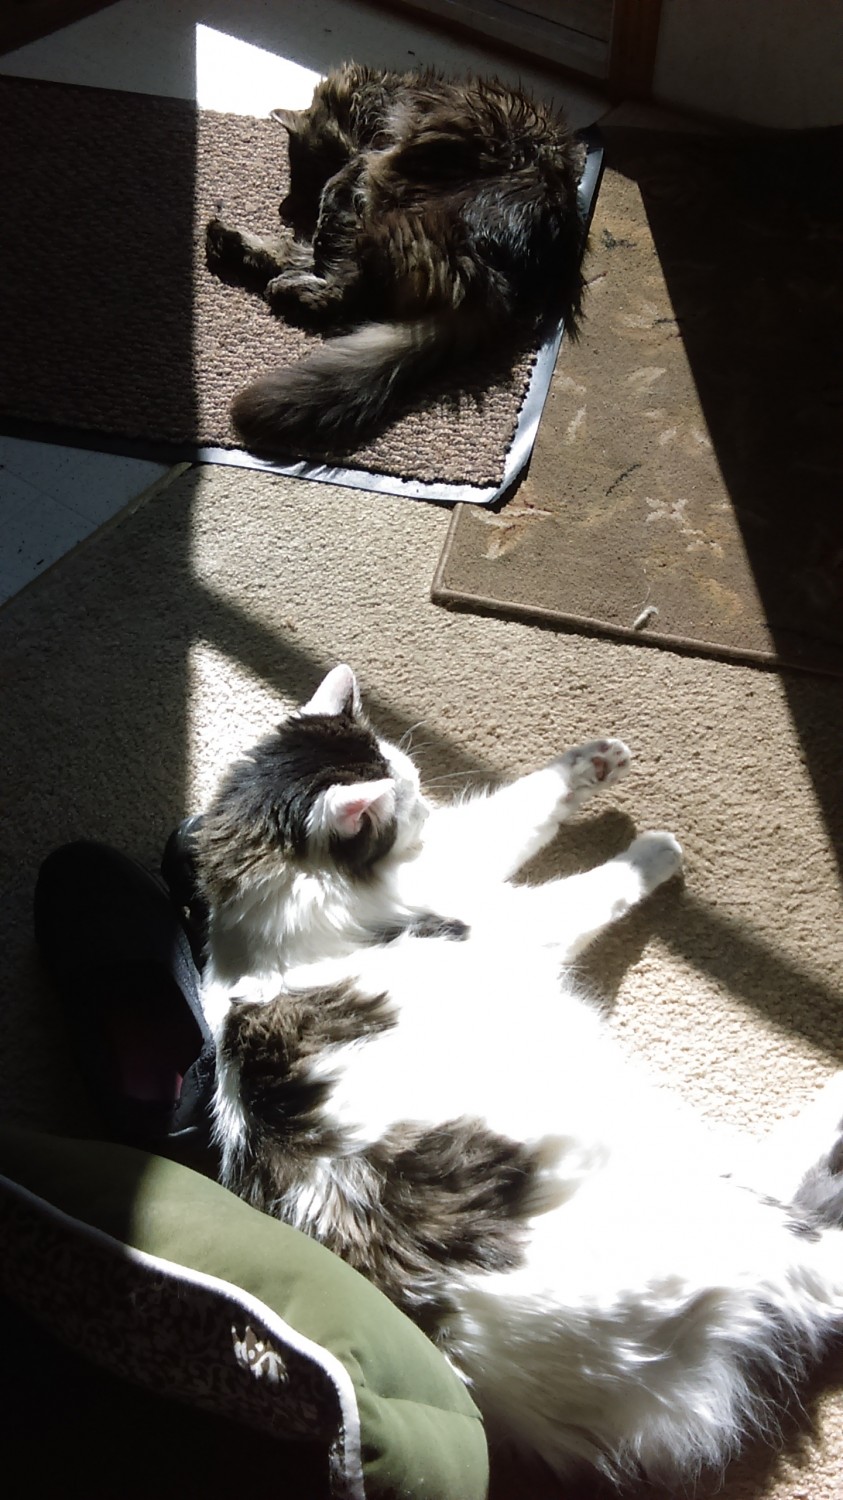 Cats enjoying the sun